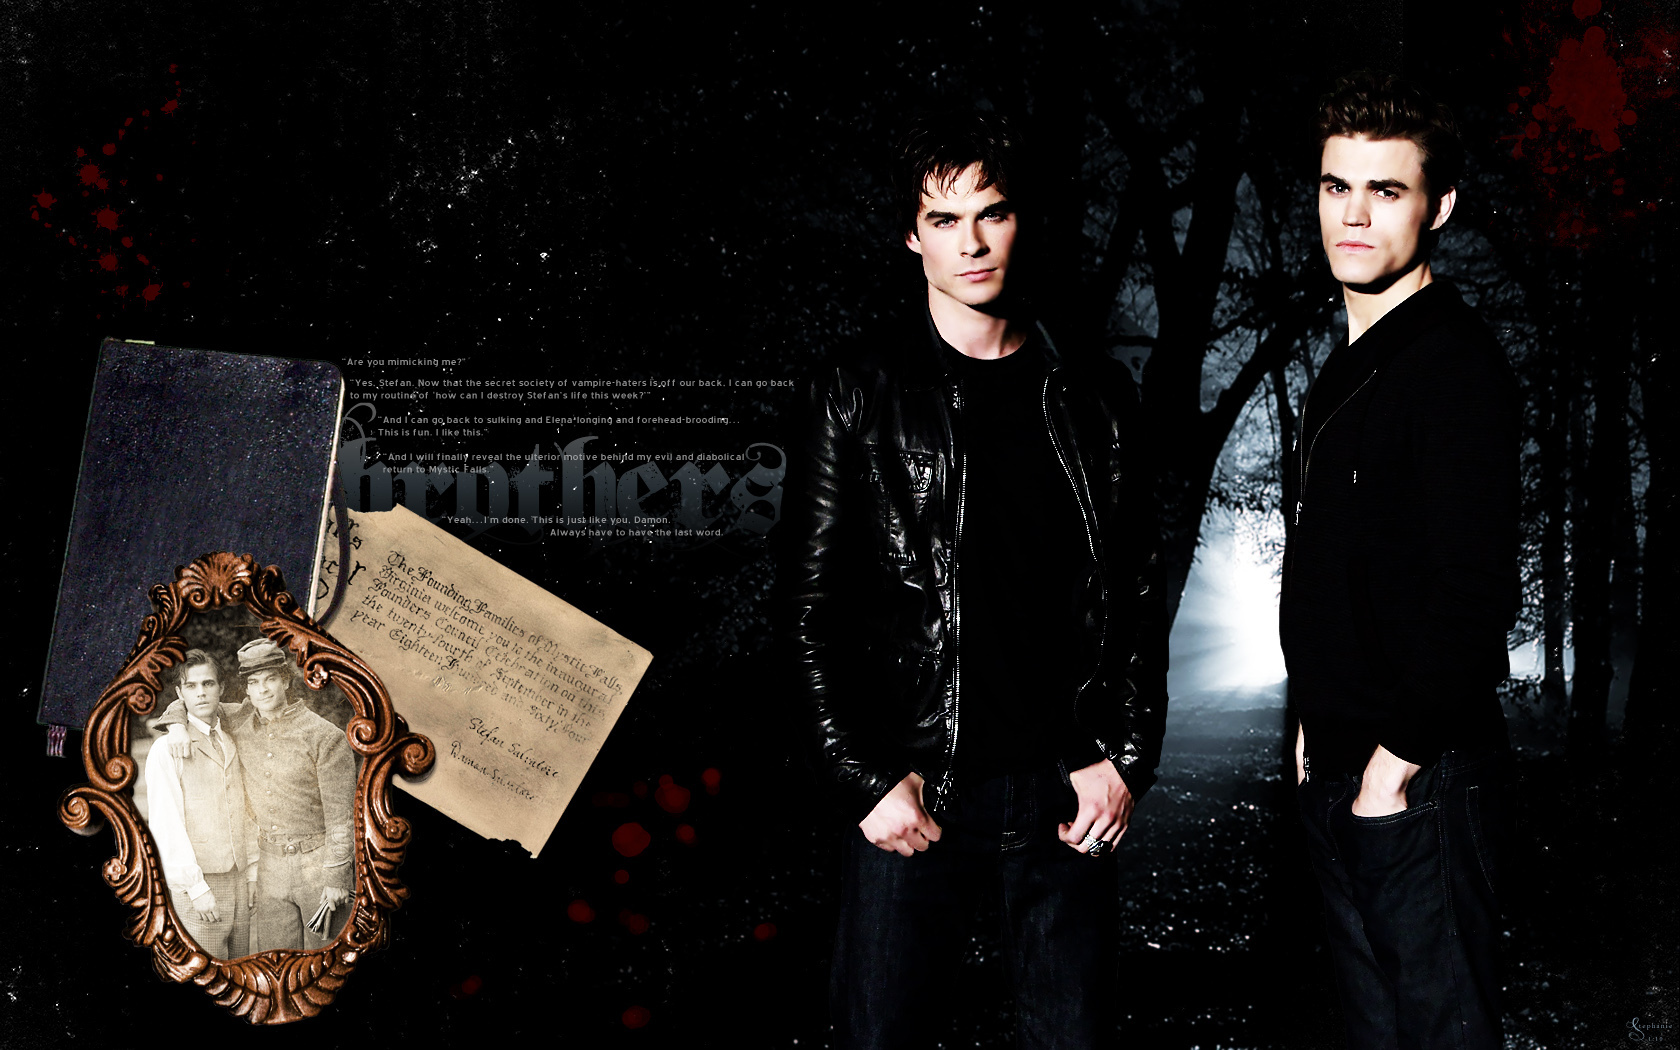 TVD - The Vampire Diaries TV Show Wallpaper (11641508) - Fanpop